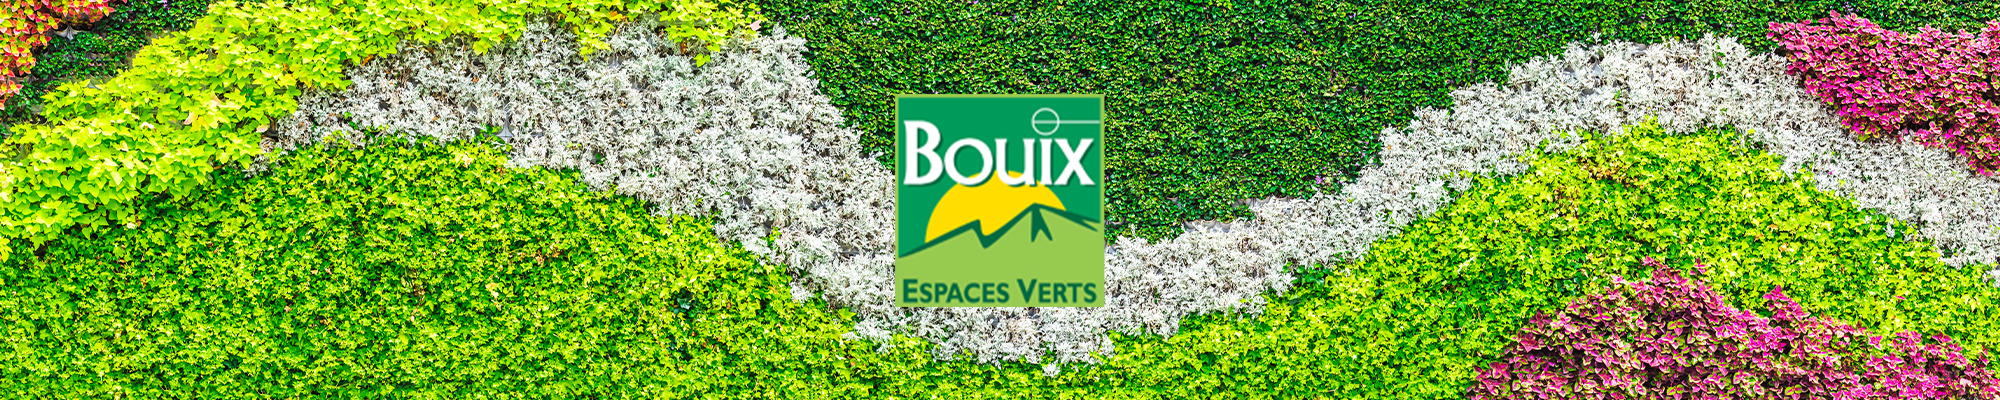 Bouix Espaces Verts 